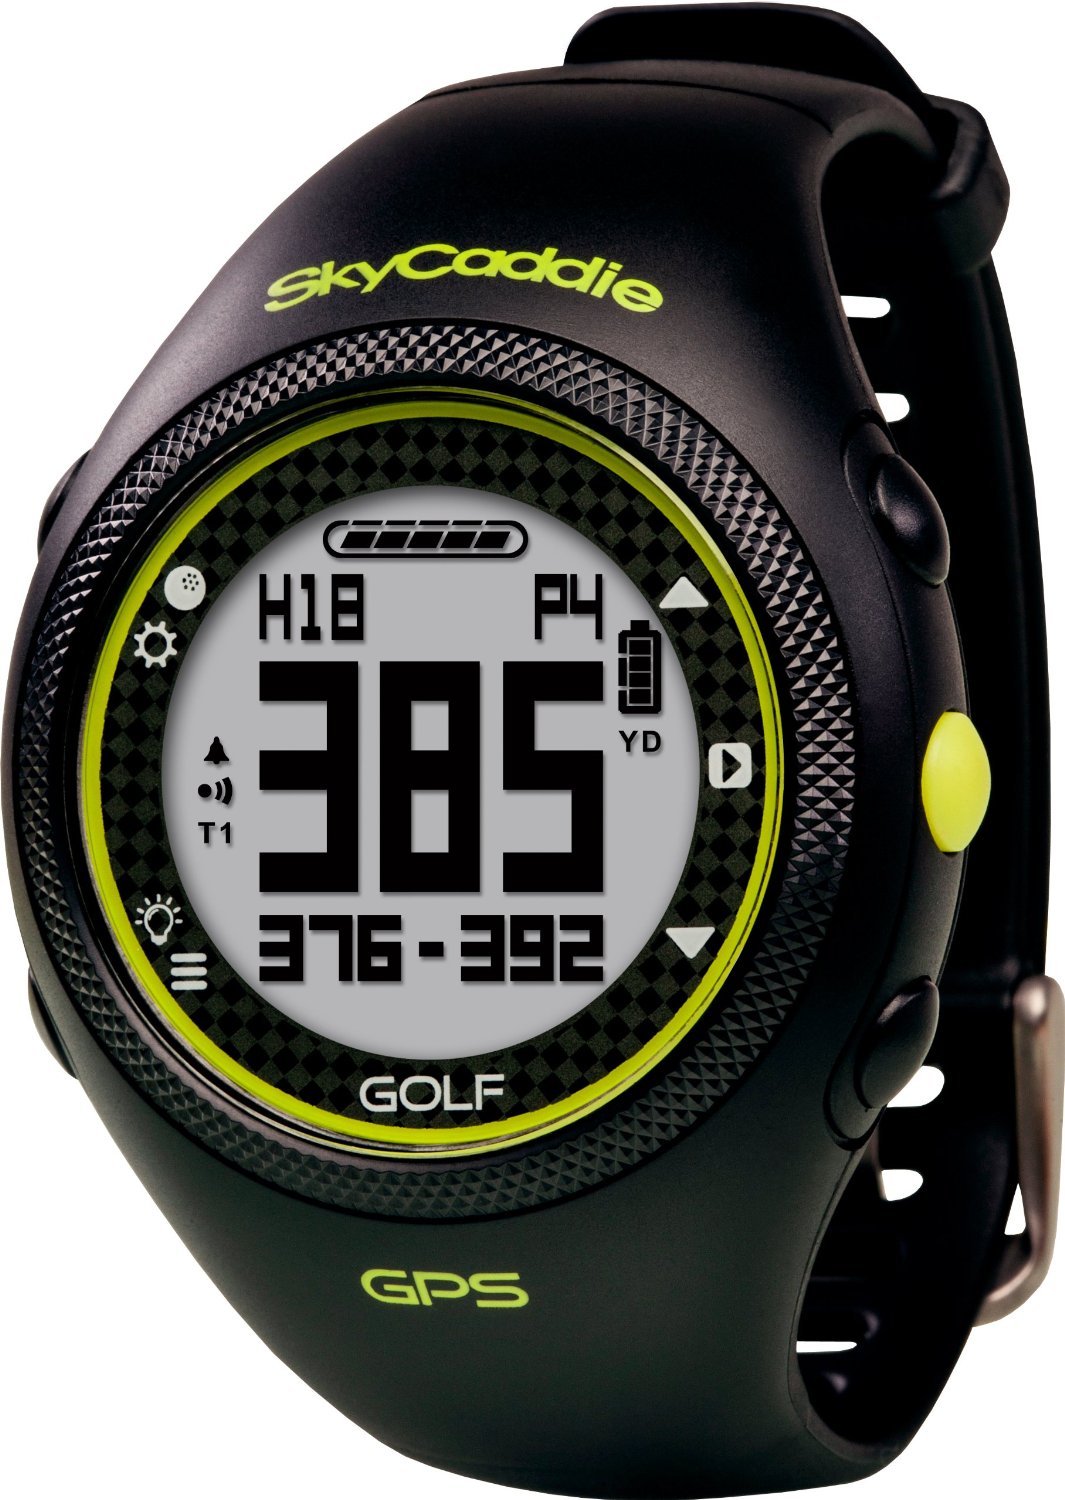 SkyCaddie WATCH Golf GPS Watch